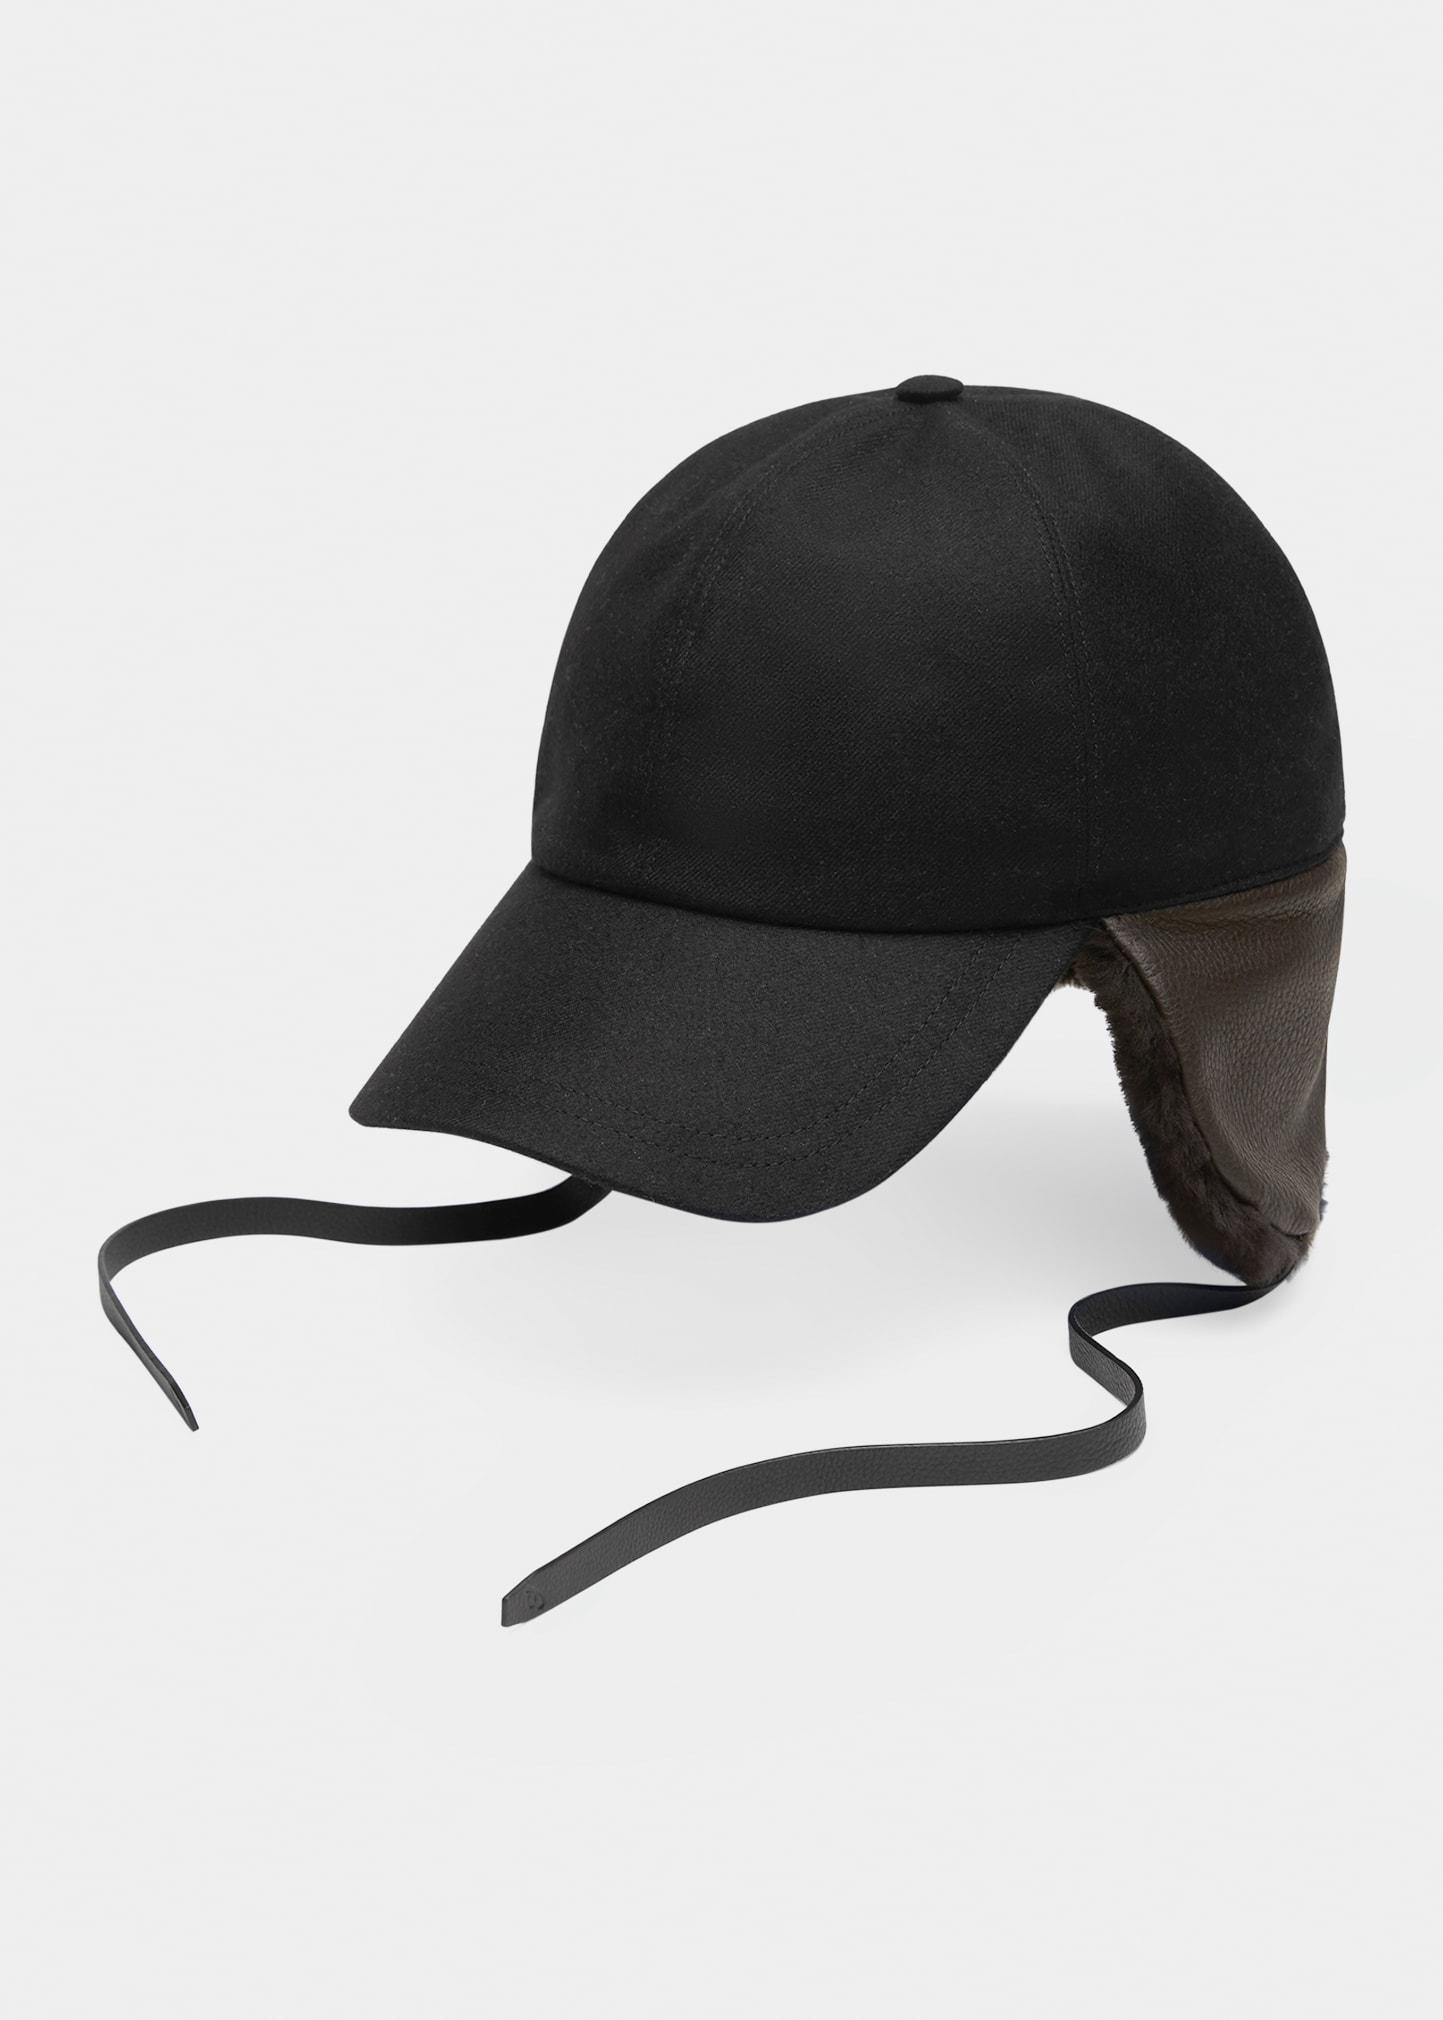 Brioni Fur-lined Baseball Hat W/ Ear Flaps in Black for Men | Lyst